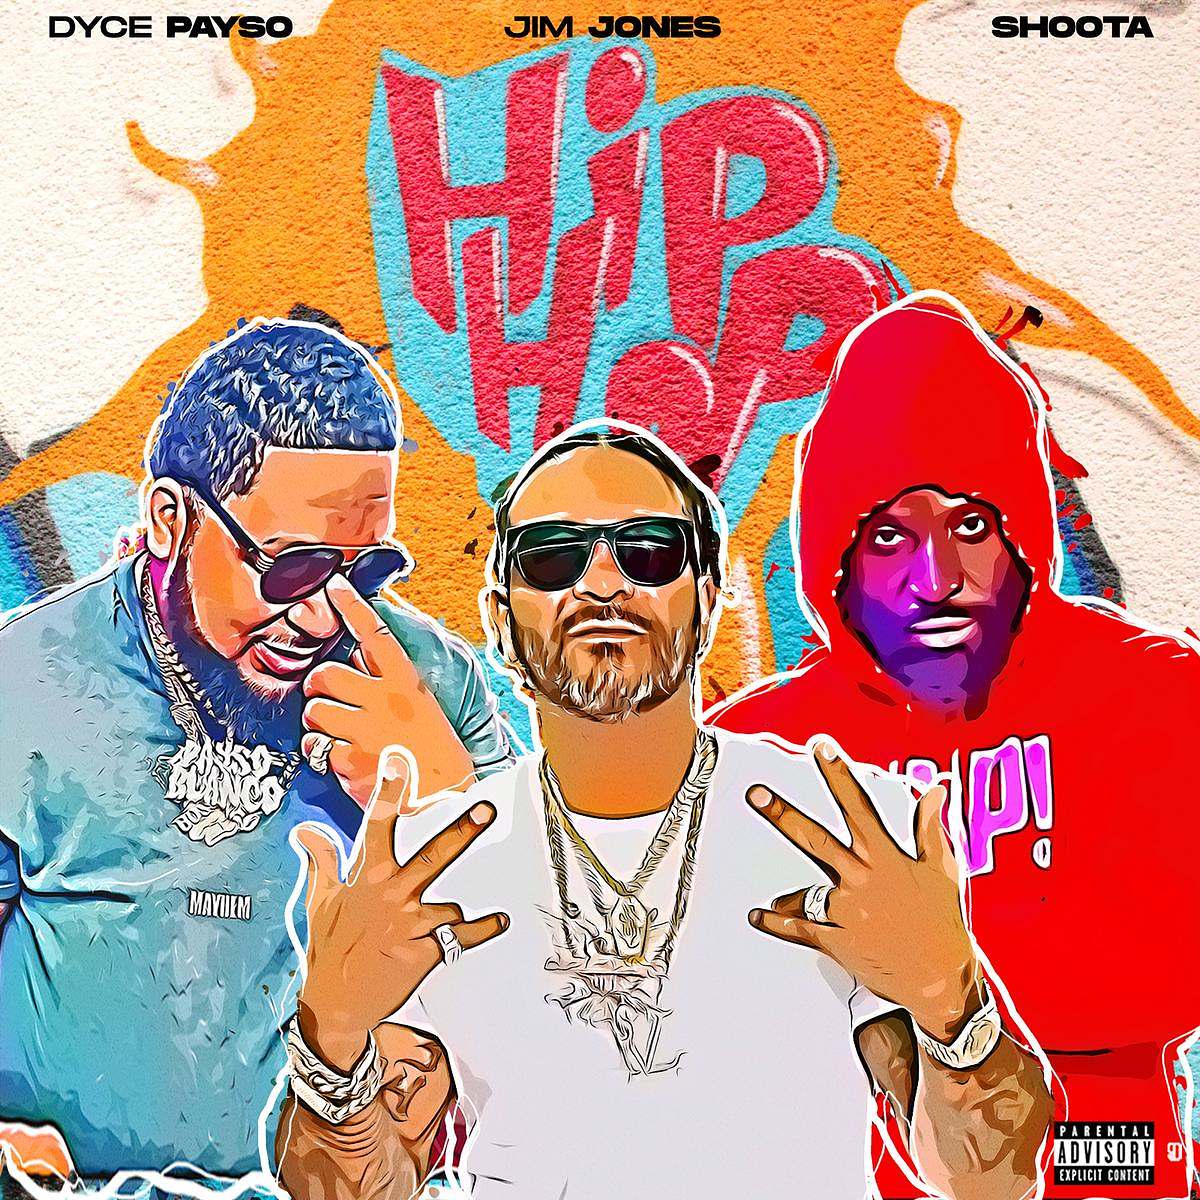 MP3: Jim Jones feat. Dyce Payso & Shoota - Hip Hop